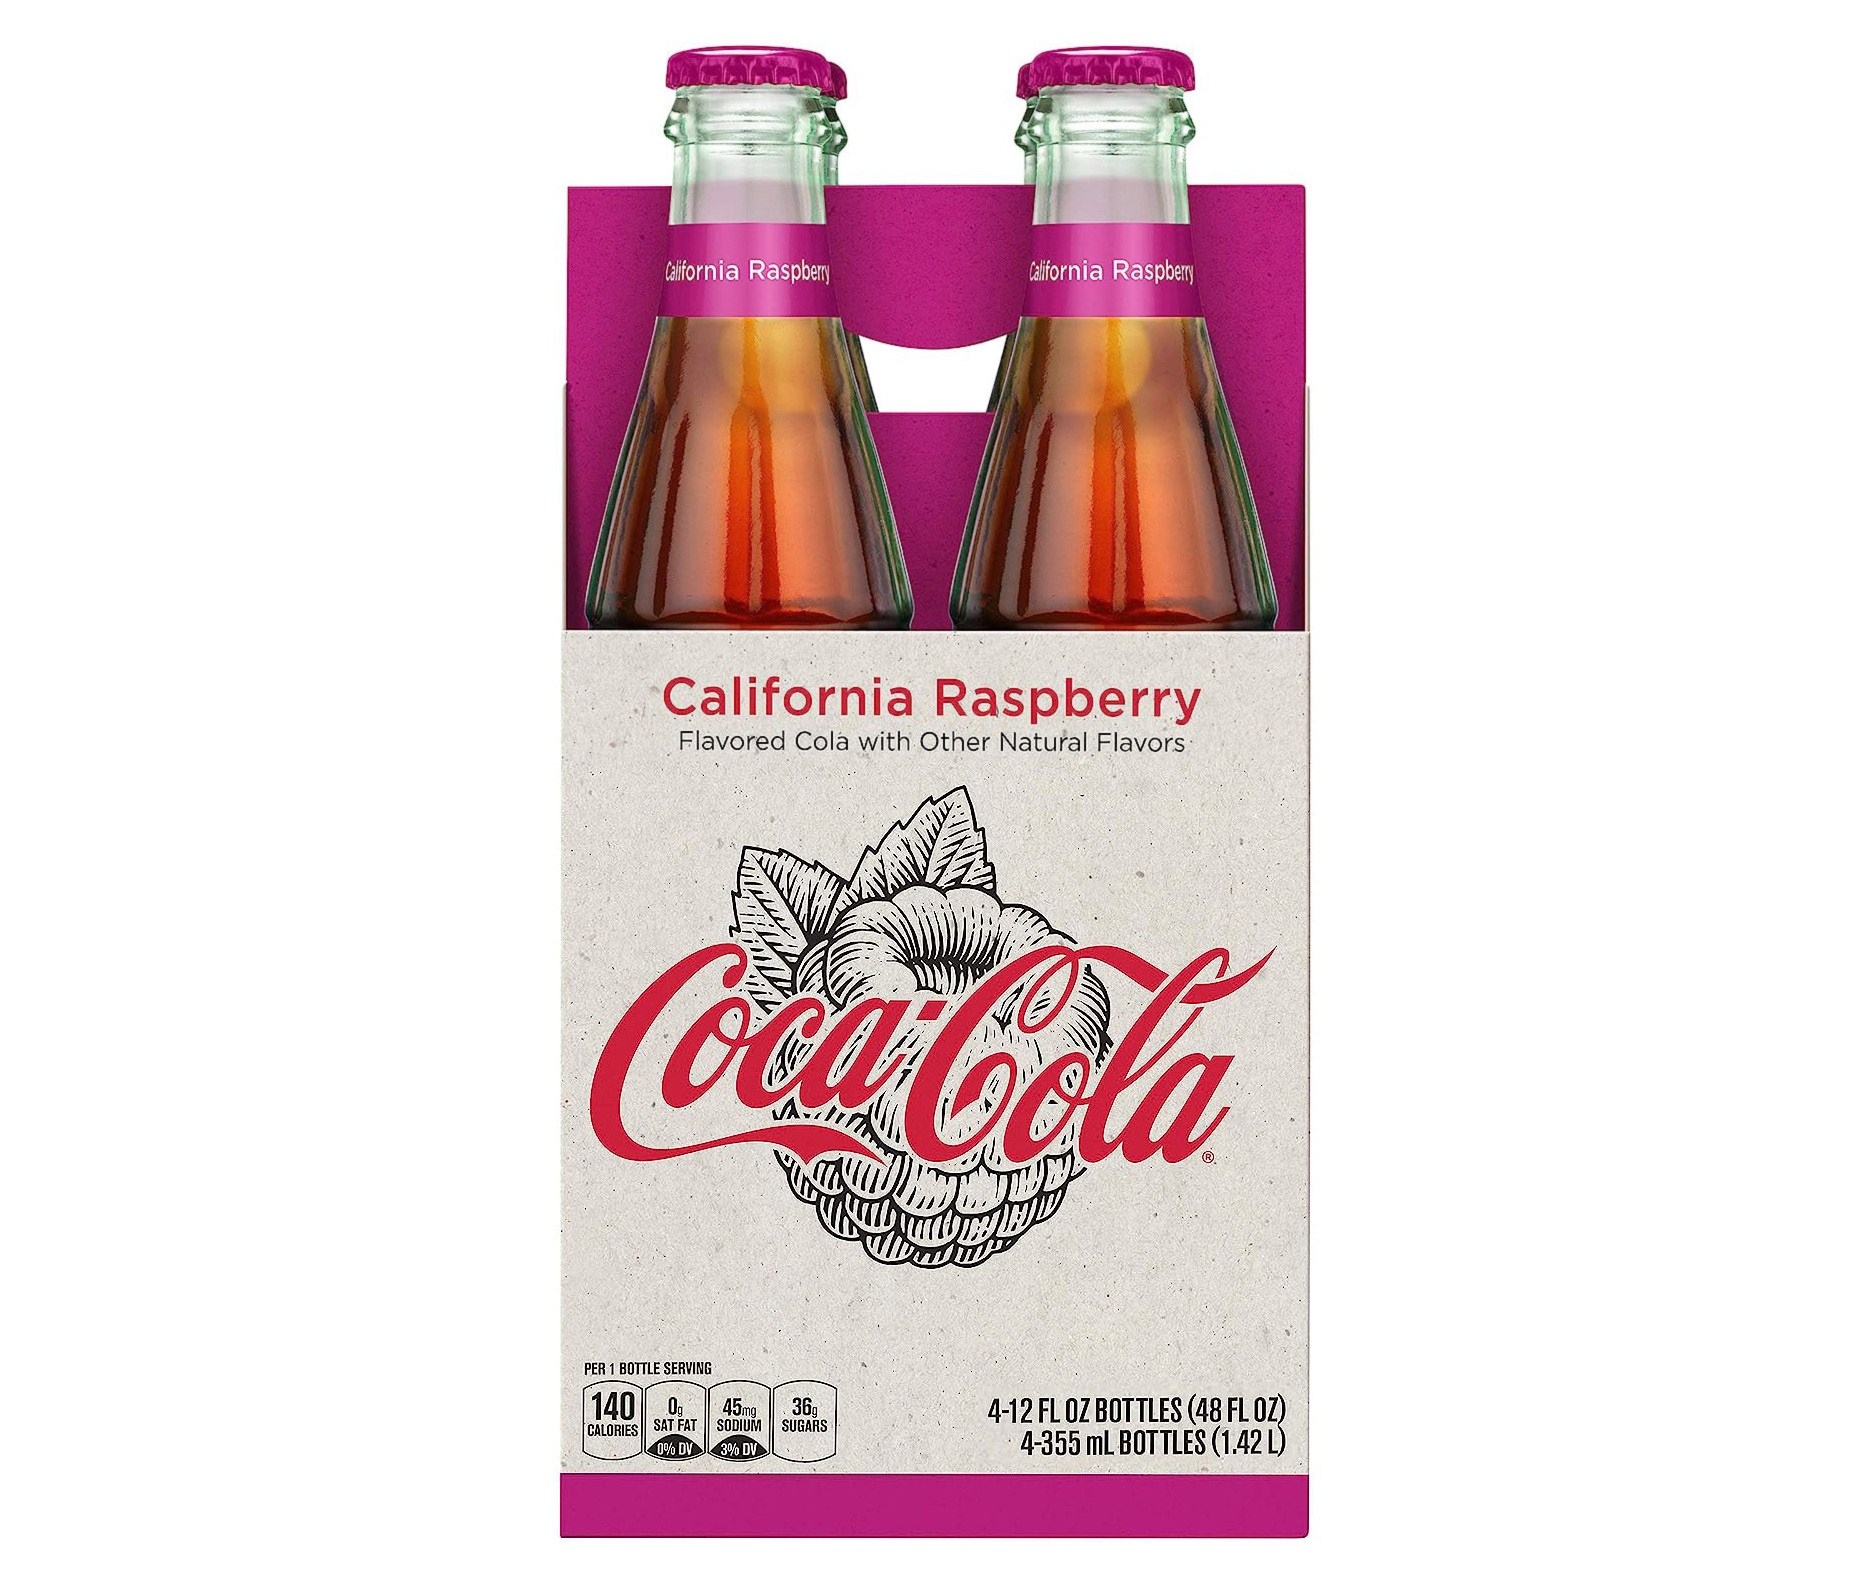 Coca-Cola's Vintage Inspired Packaging Design by Steven Noble